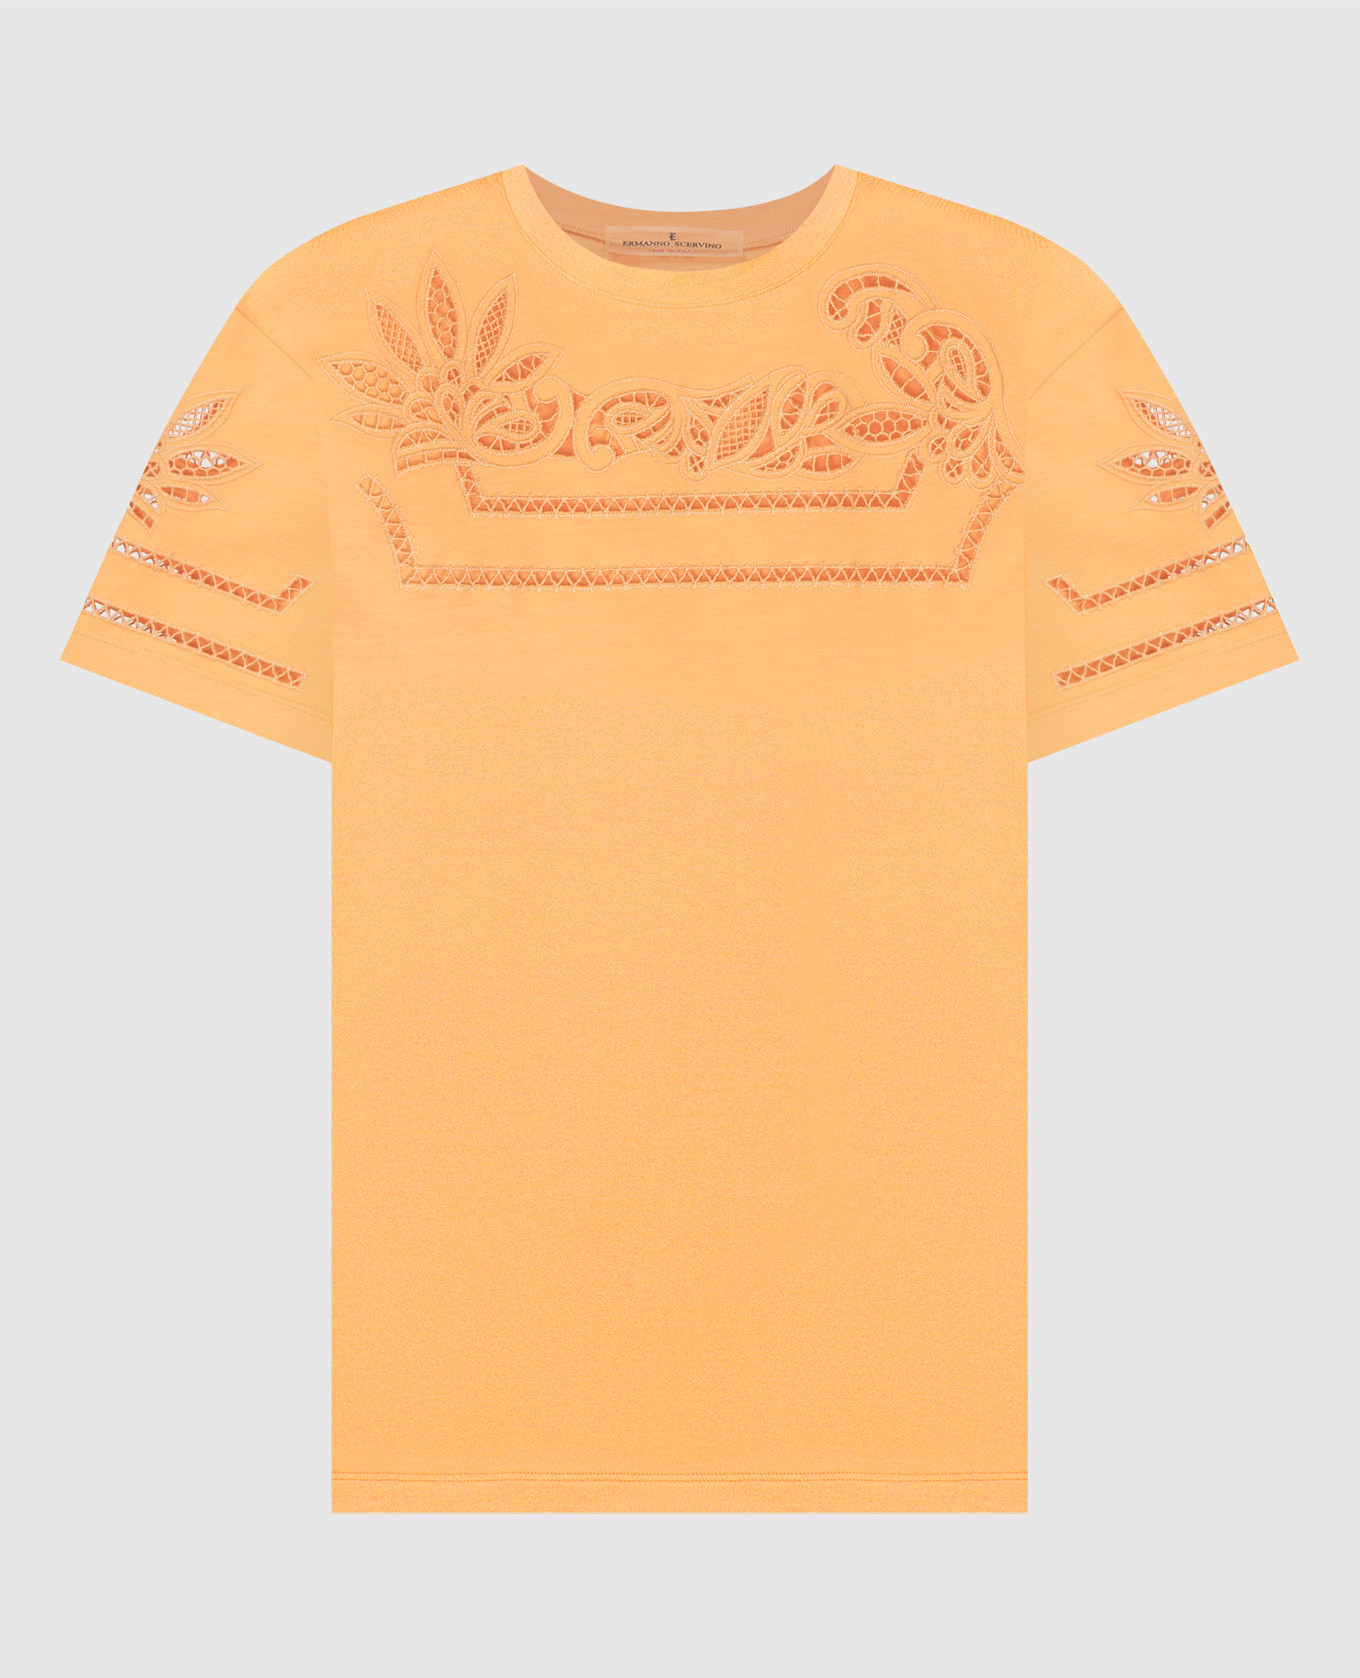 Orange t-shirt with lace